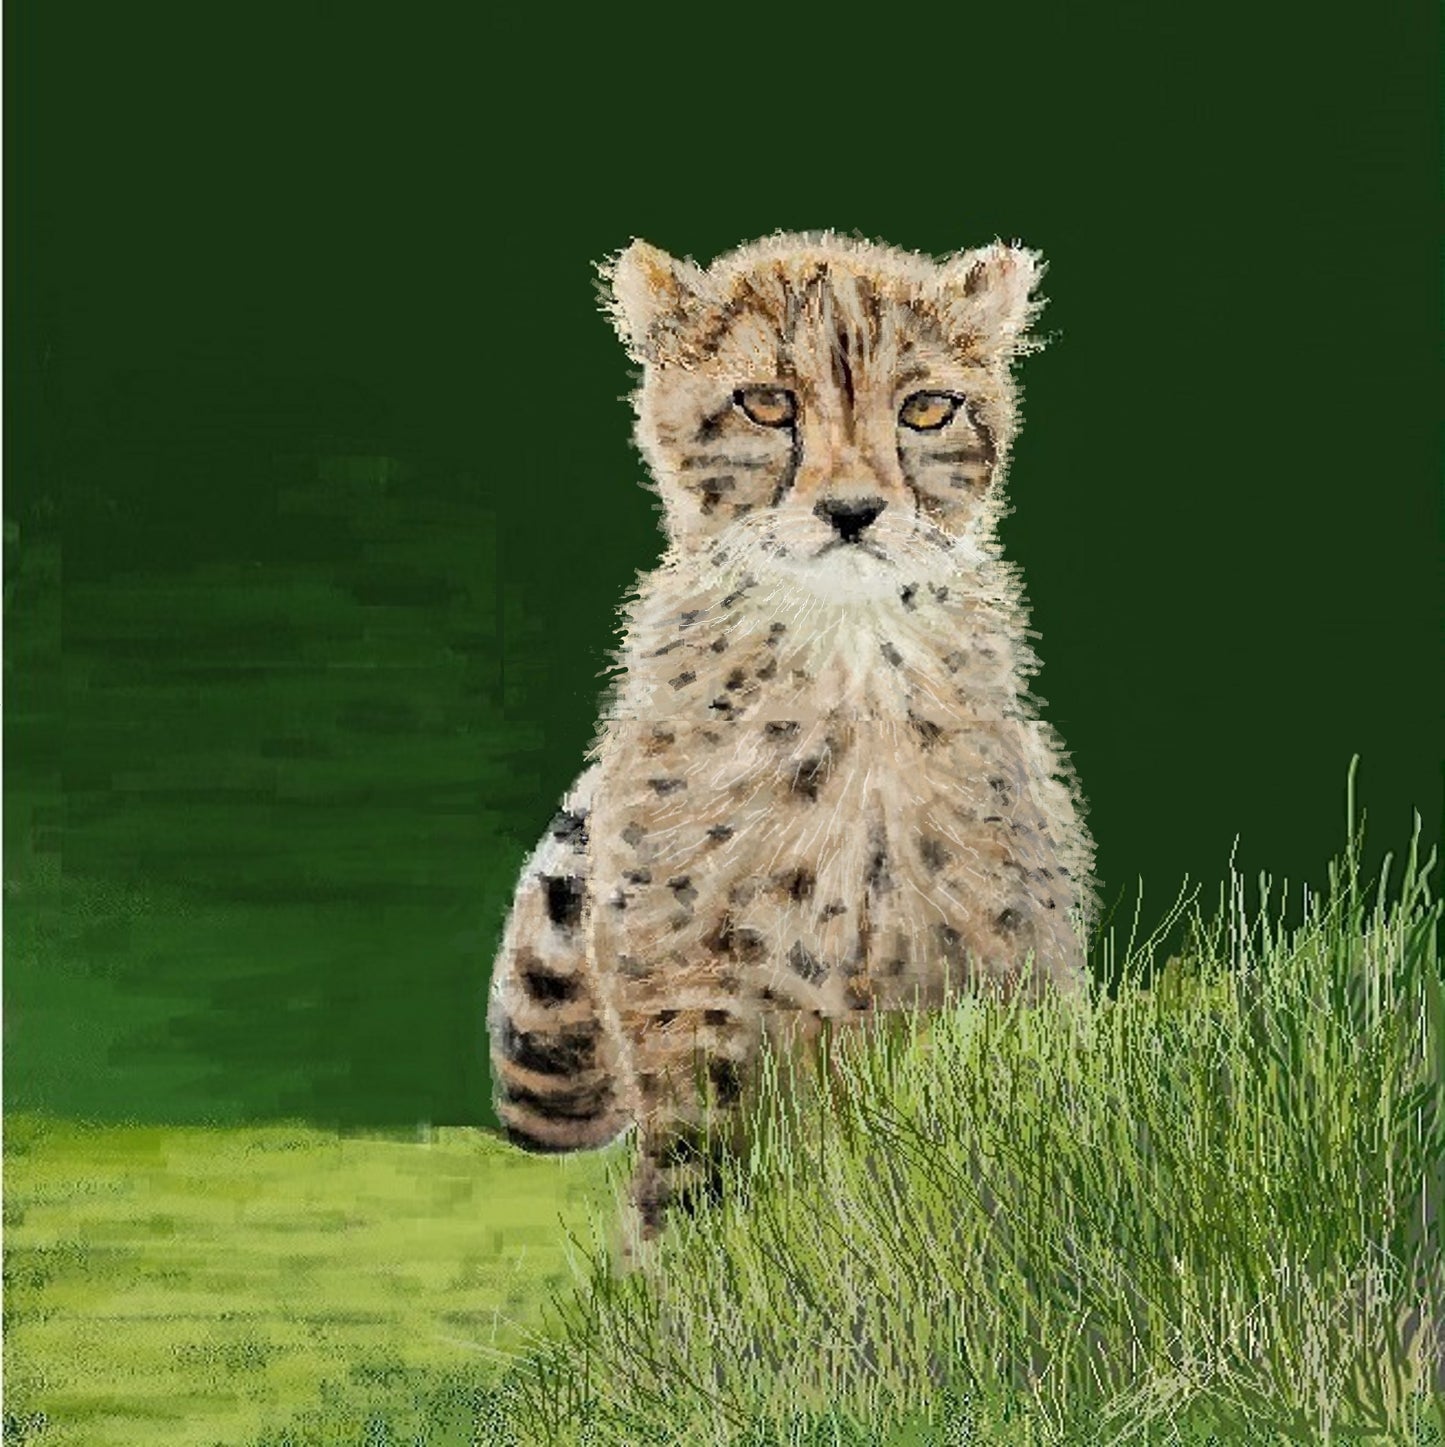 "Baby Cheetah" Original Giclée on Canvas